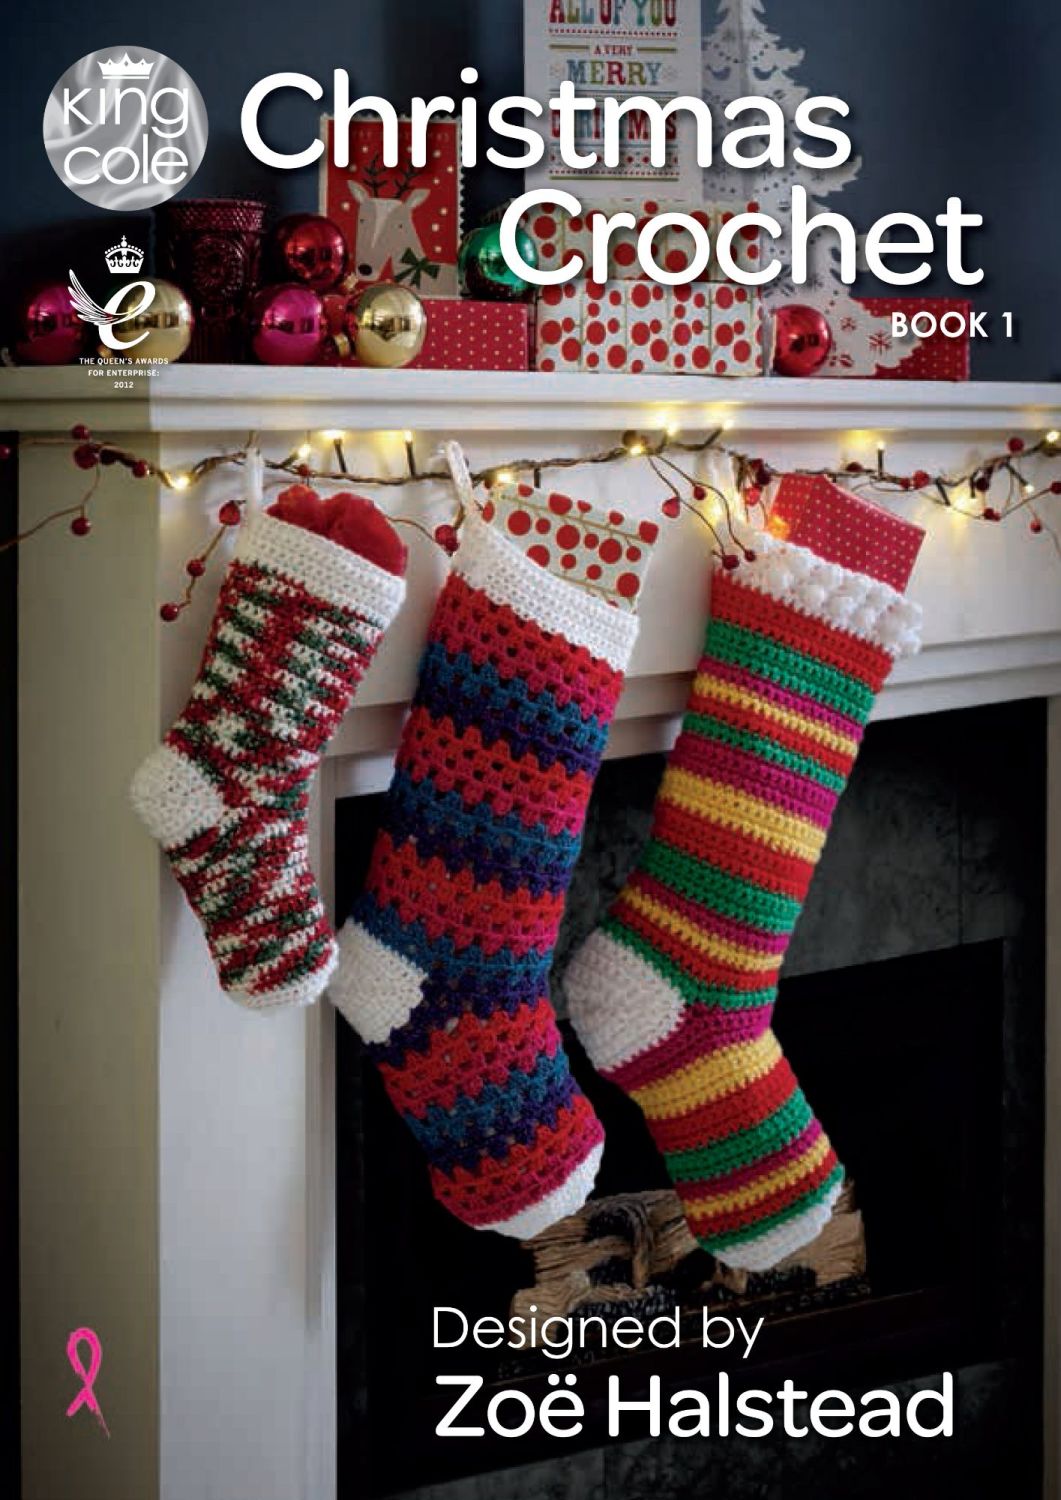 Christmas Crochet Book 1 - Designed by Zoe Halstead